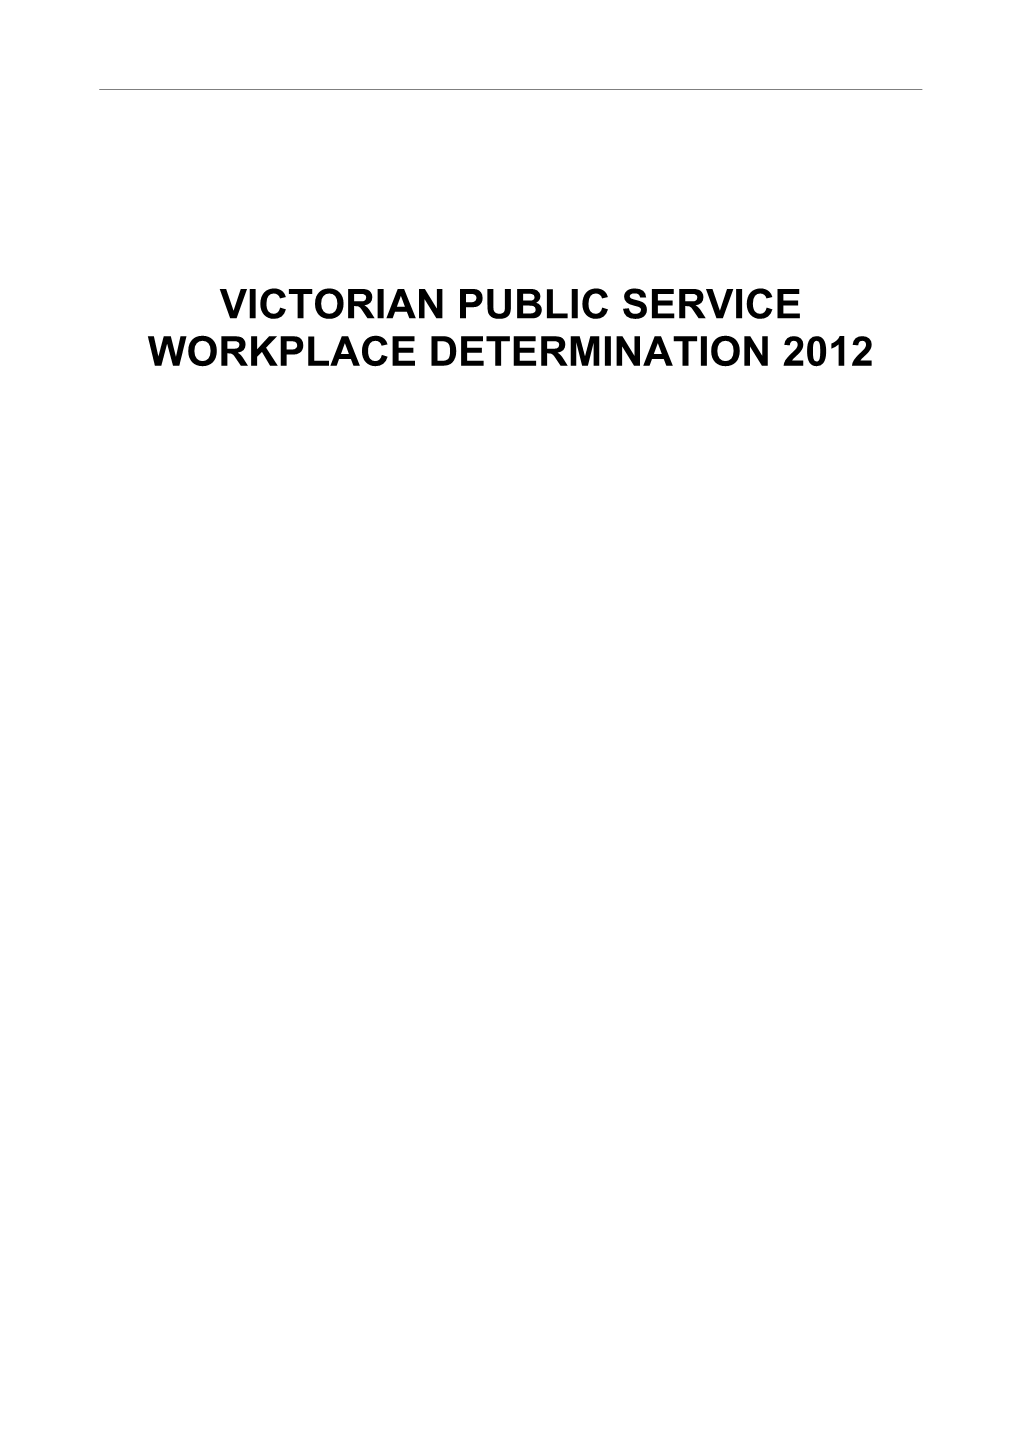 Victorian Public Service Workplace Determination 2012